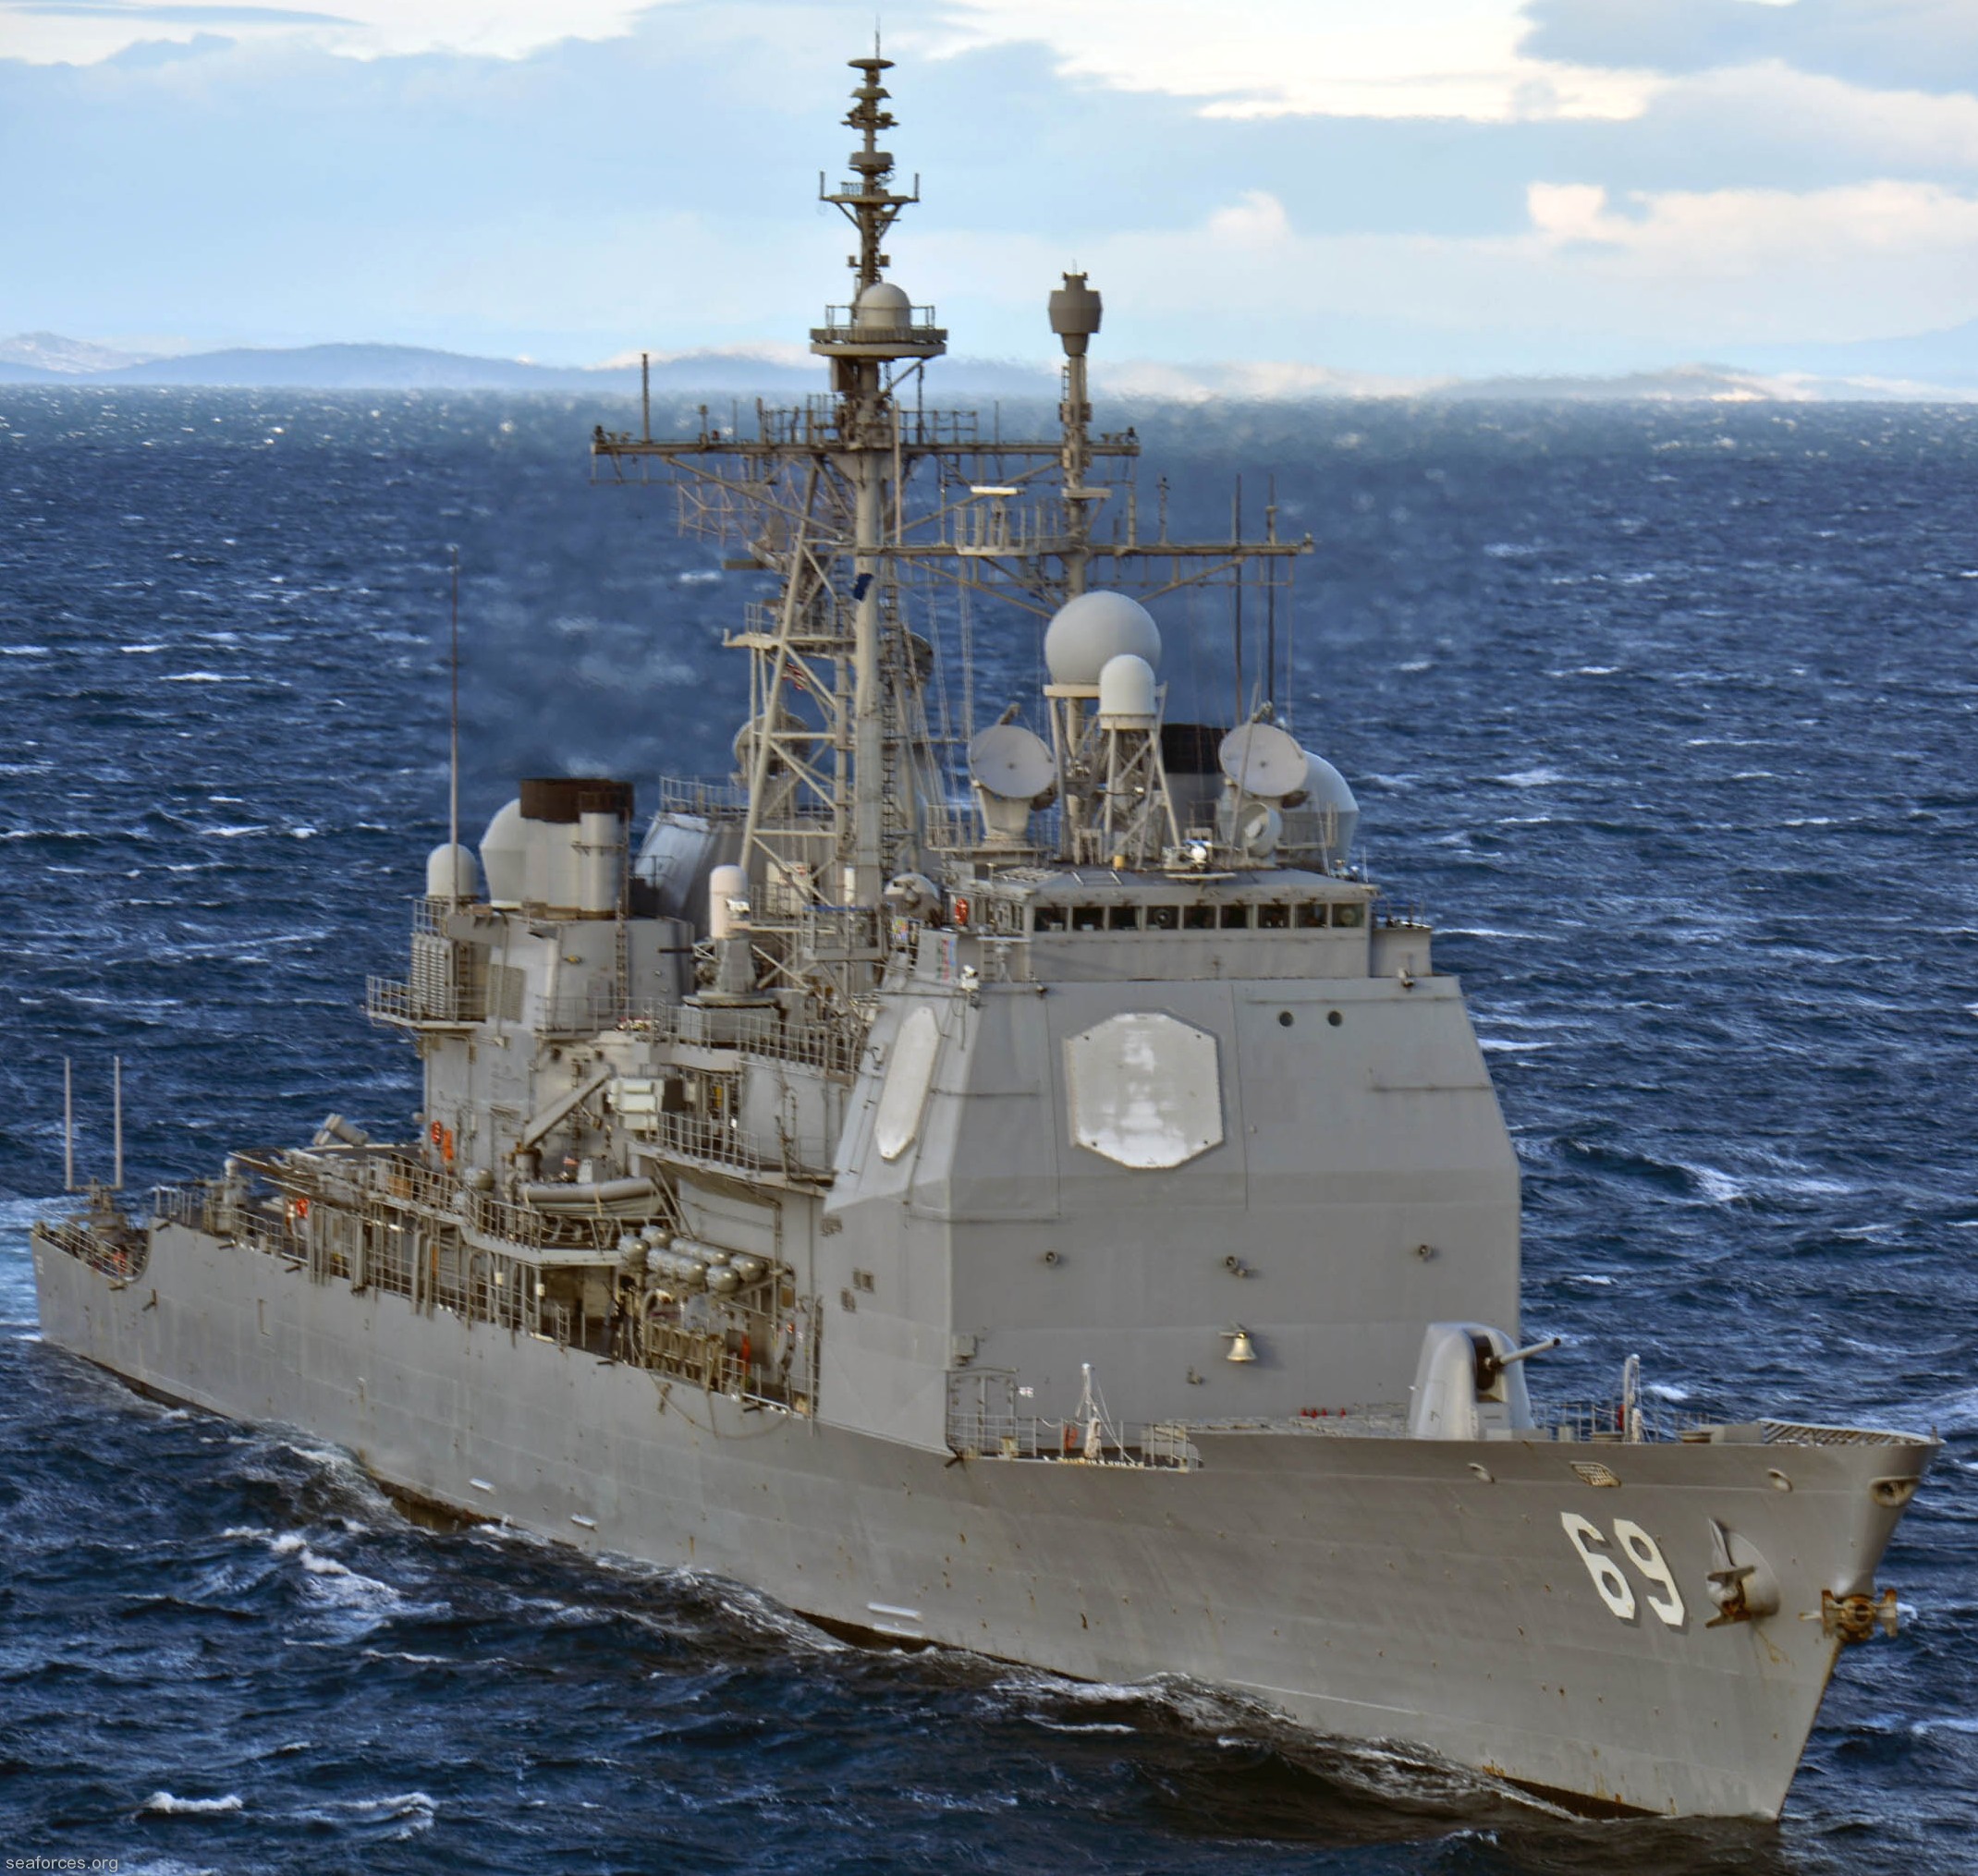 cg-69 uss vicksburg ticonderoga class guided missile cruiser us navy 10 adriatic sea